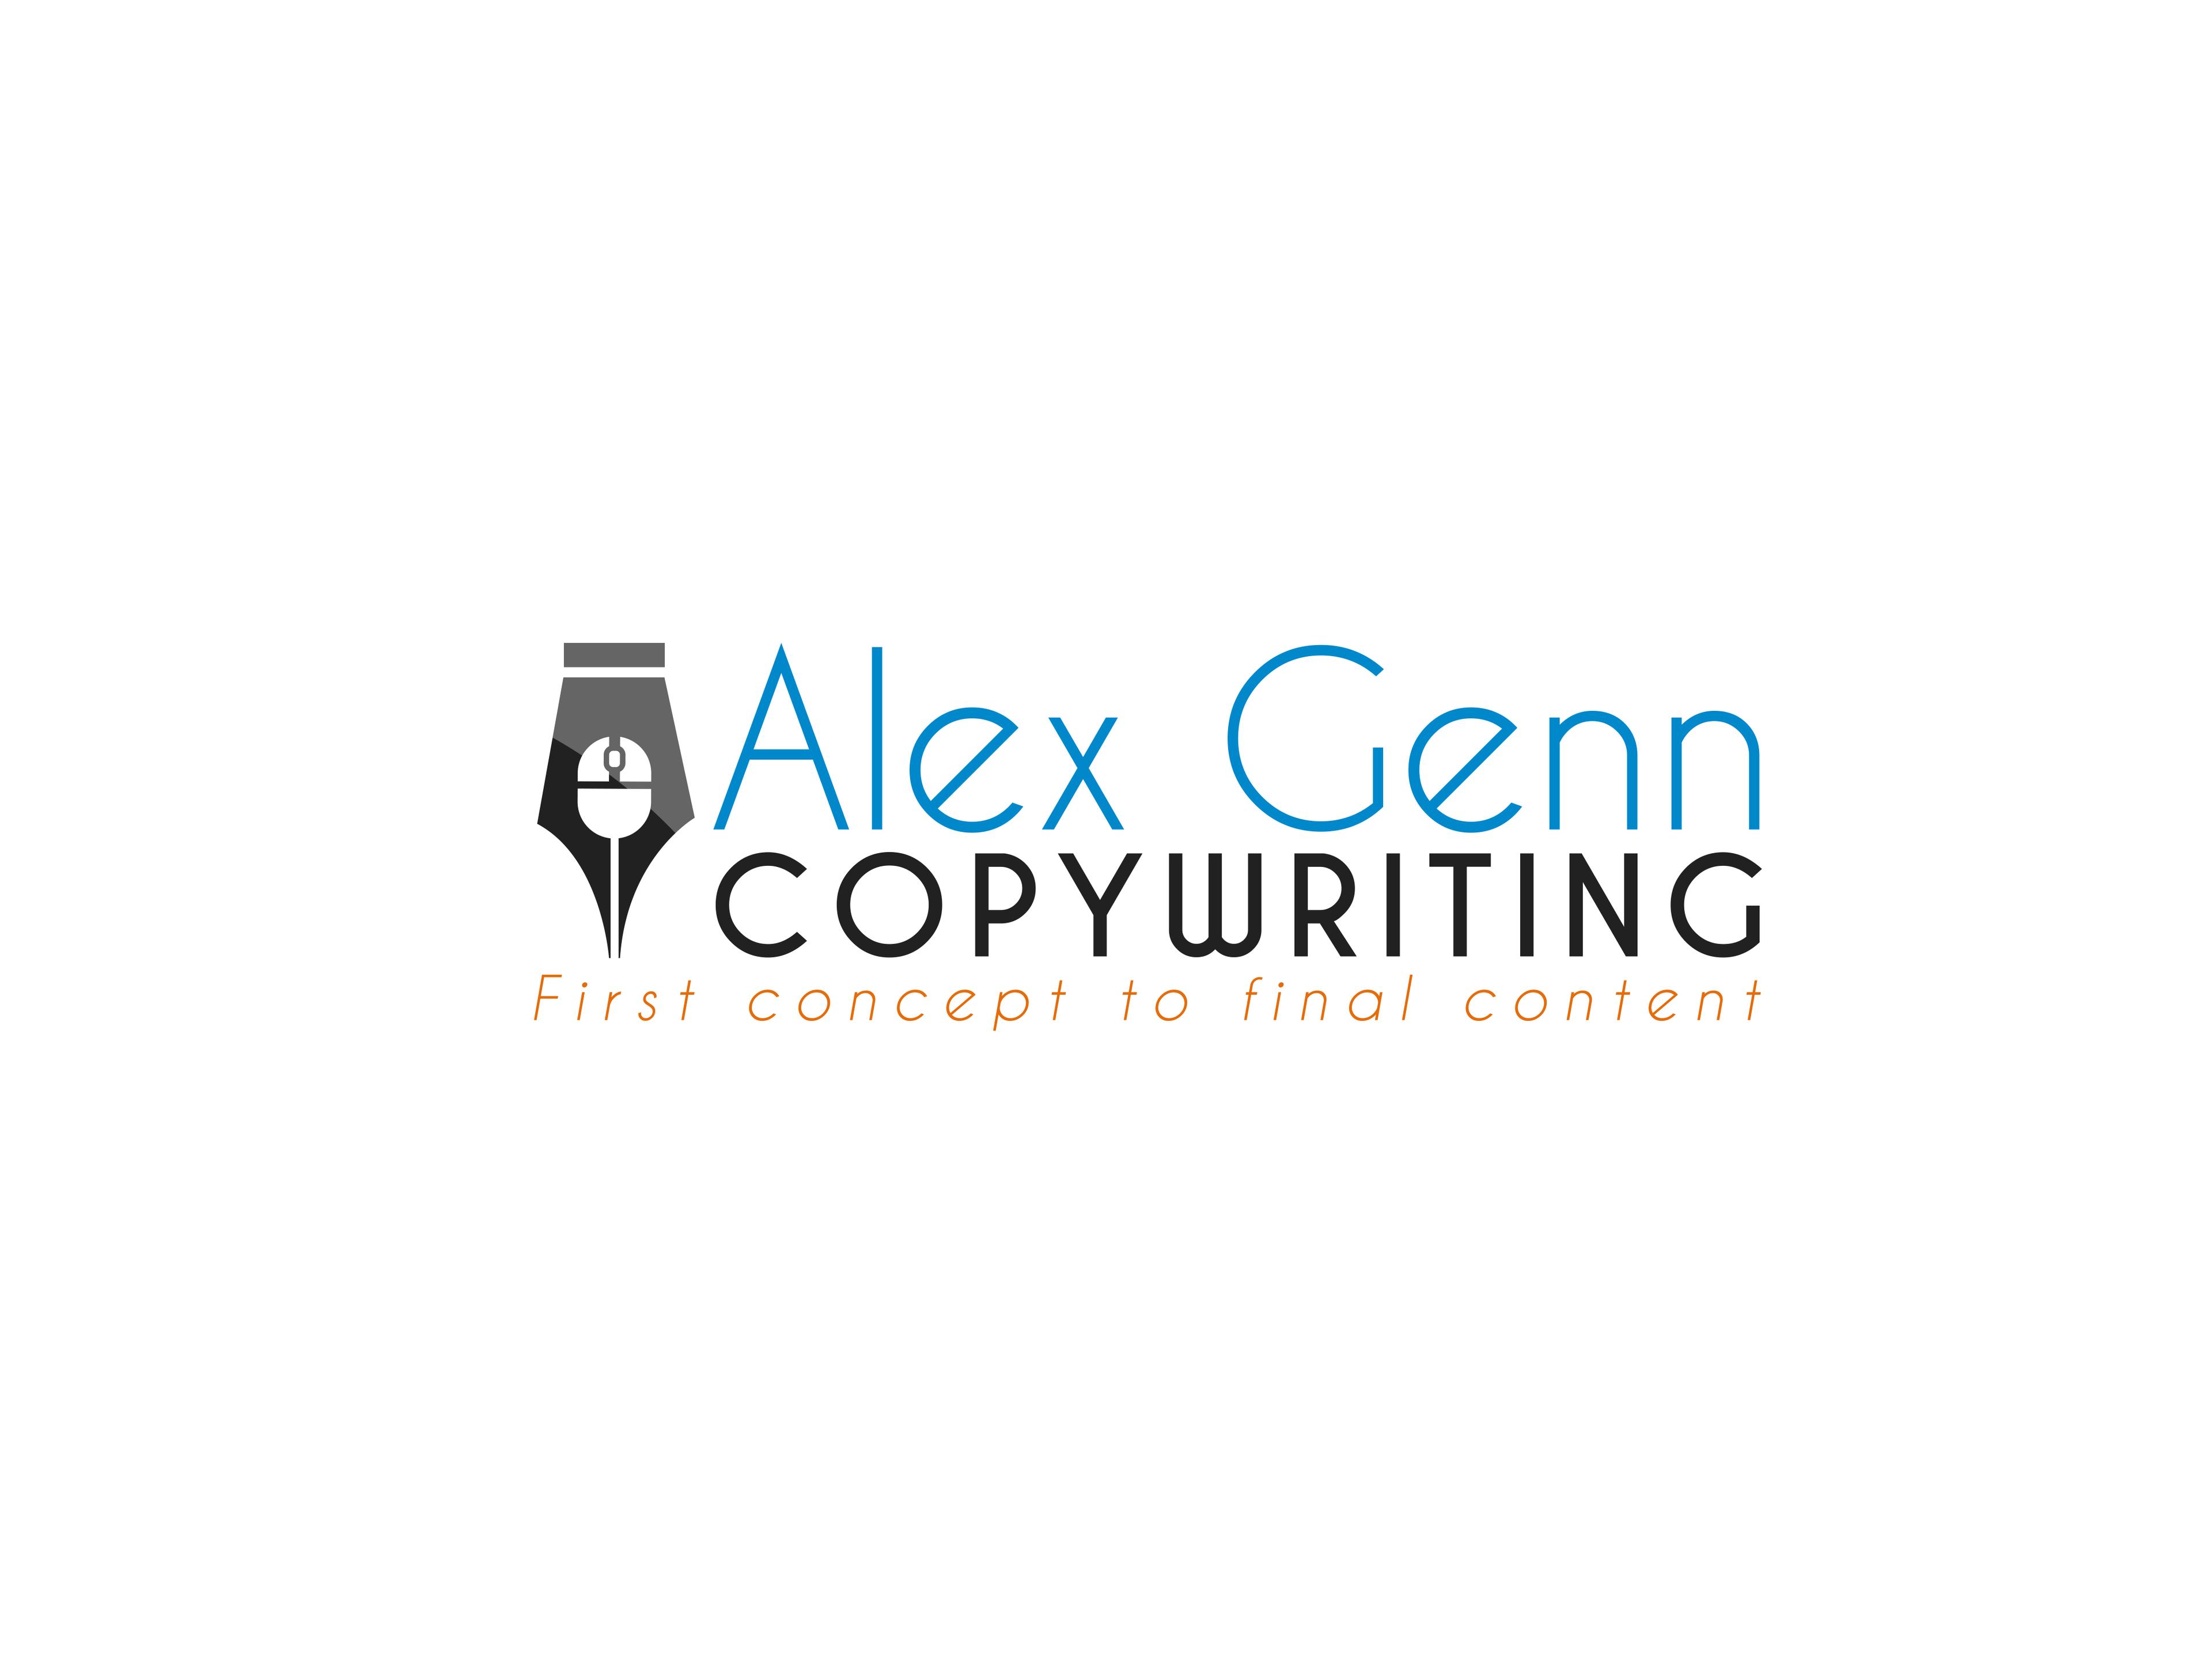 Alex Genn Copywriting cover